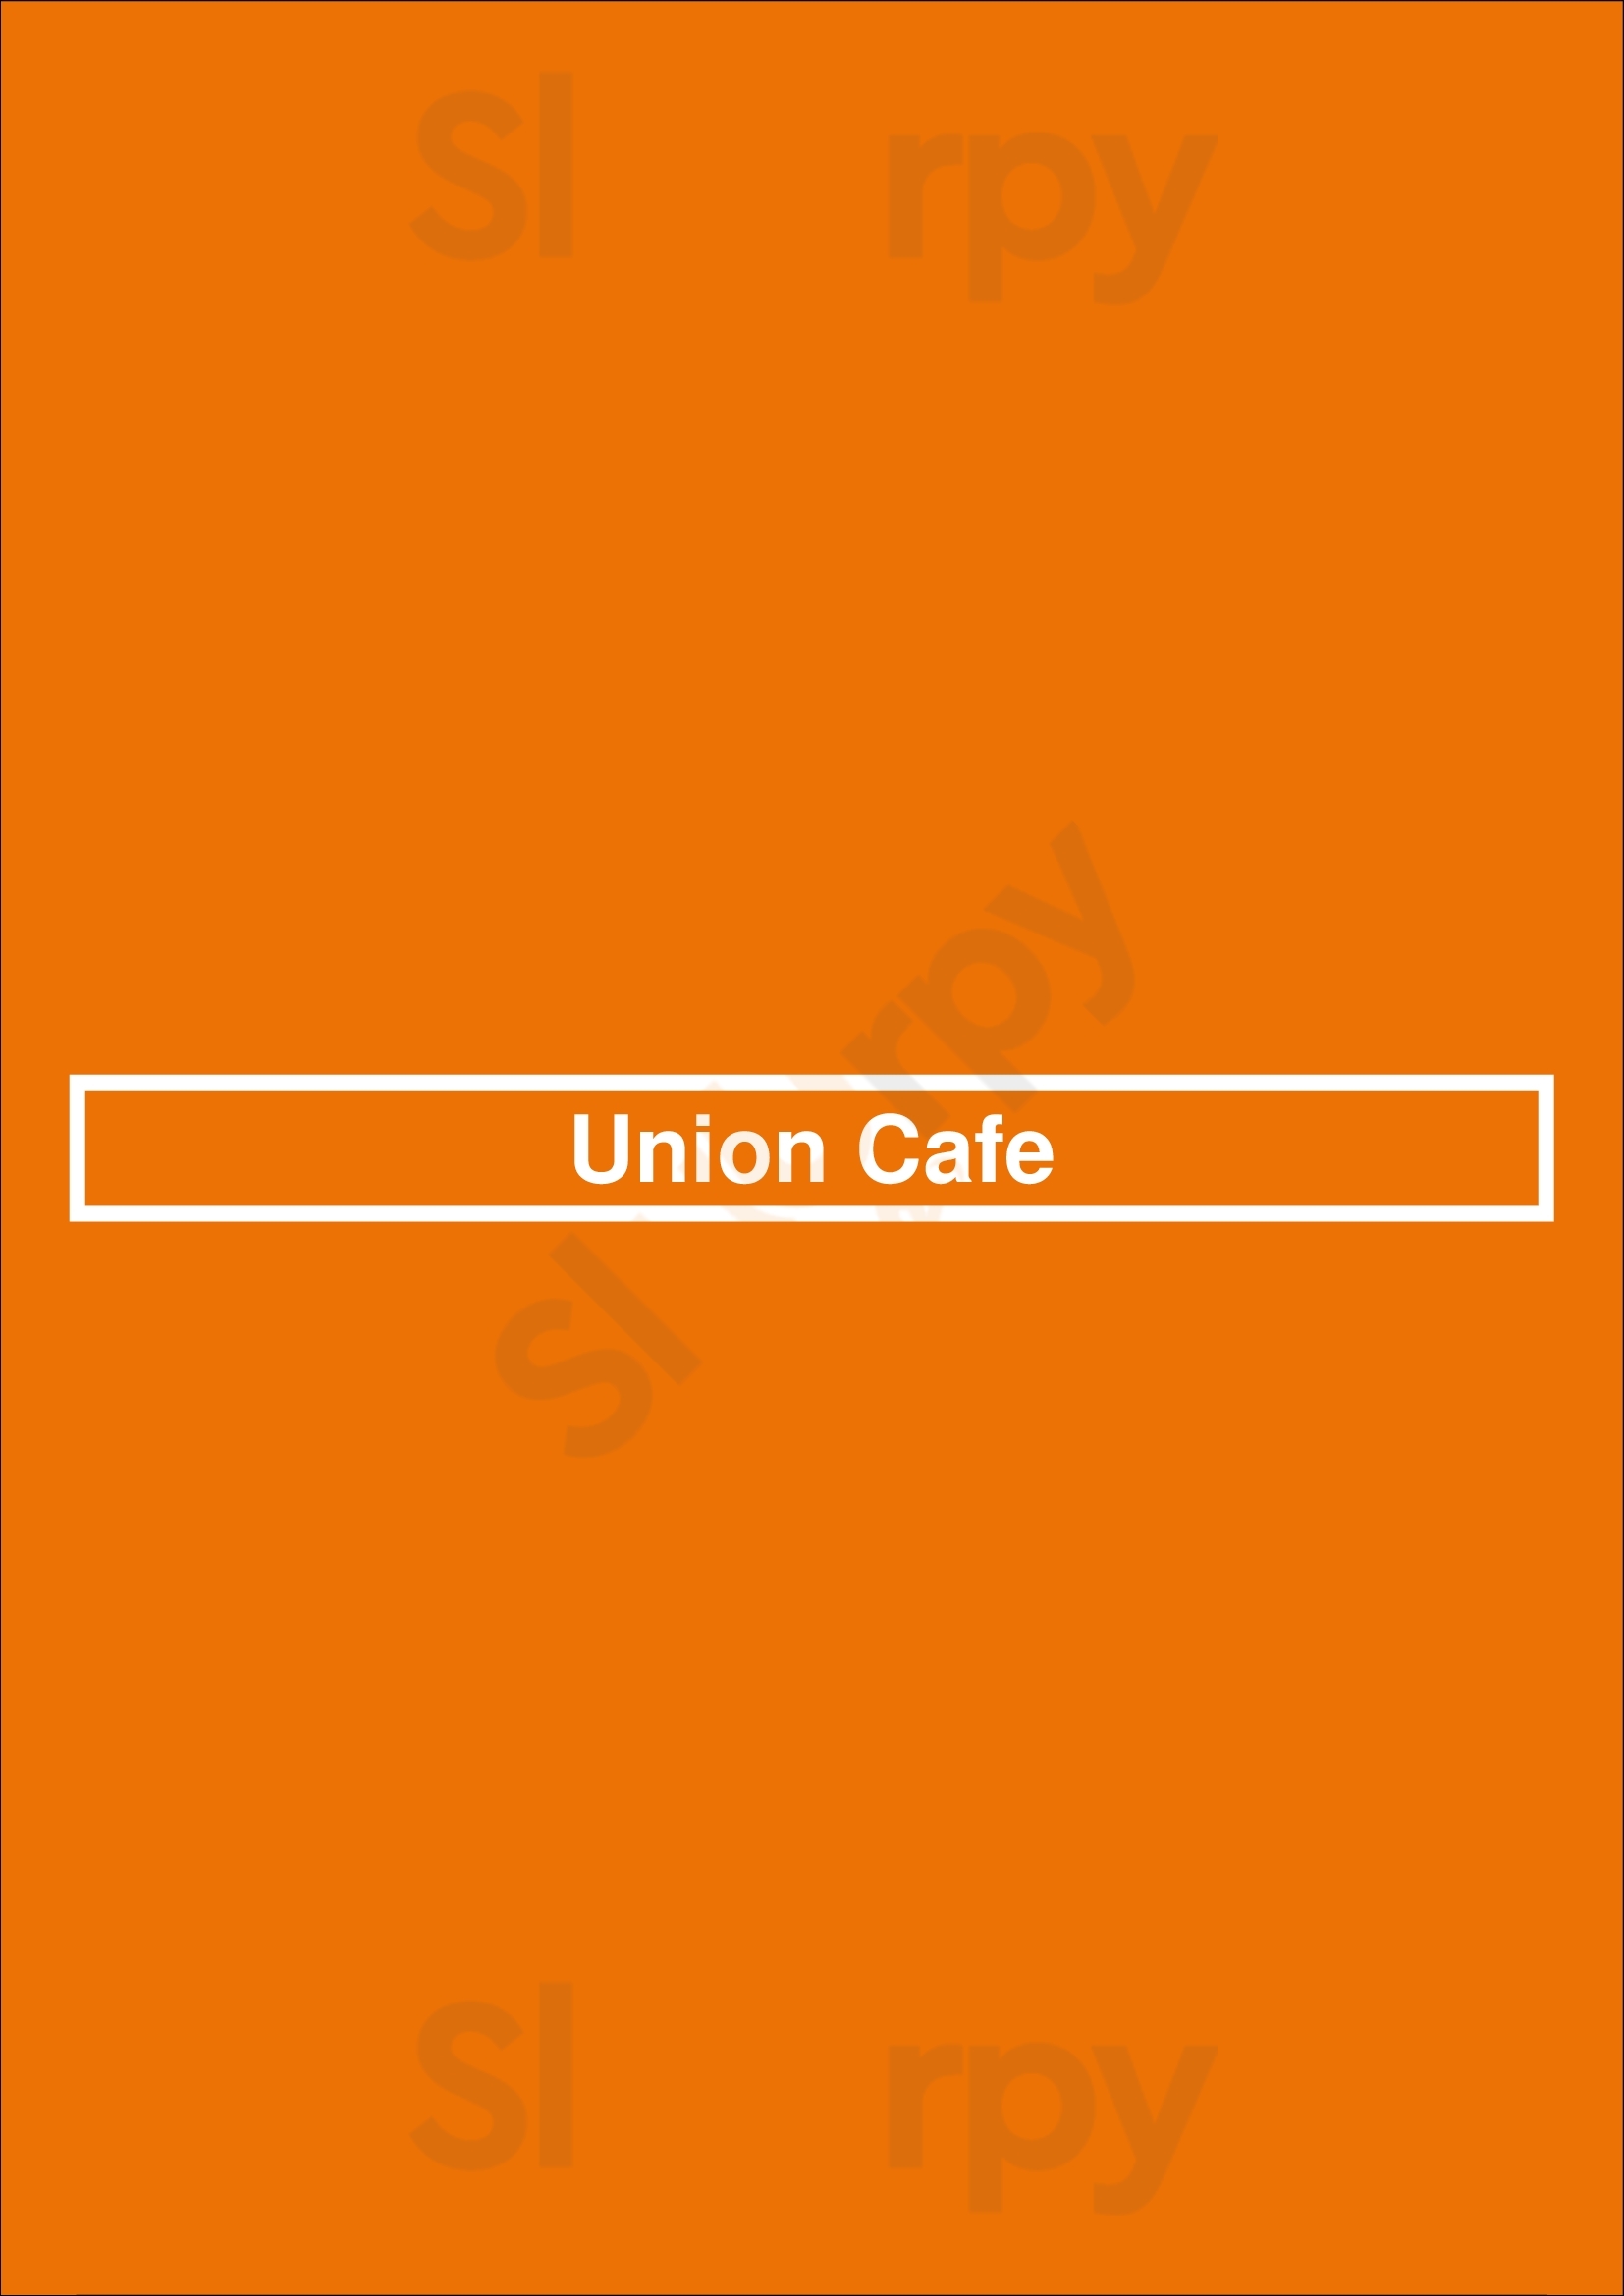 Union Cafe Dublin Menu - 1